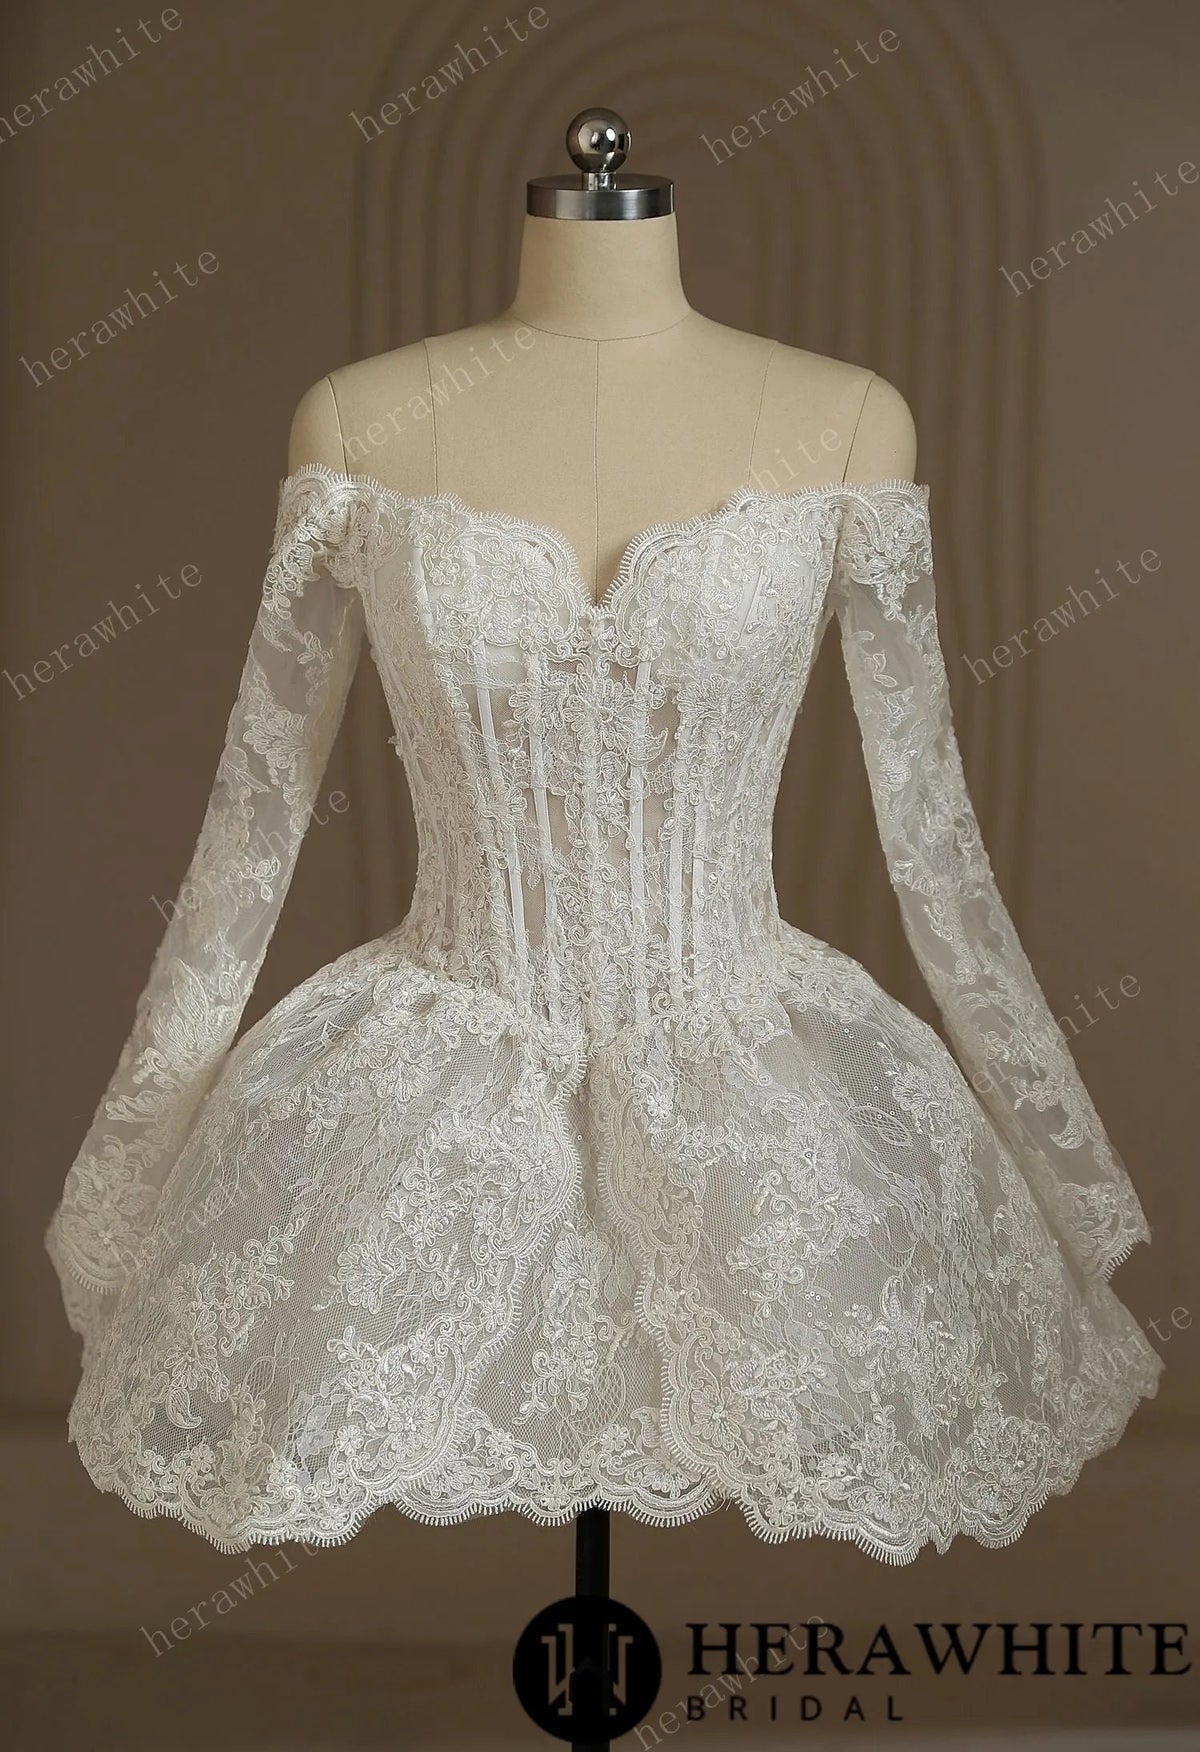 Mini Midi Short Wedding Dress Reception Dress Sparkle Off the Shoulder Romantic Style All Over Lace Long Sleeve Engagement Dress